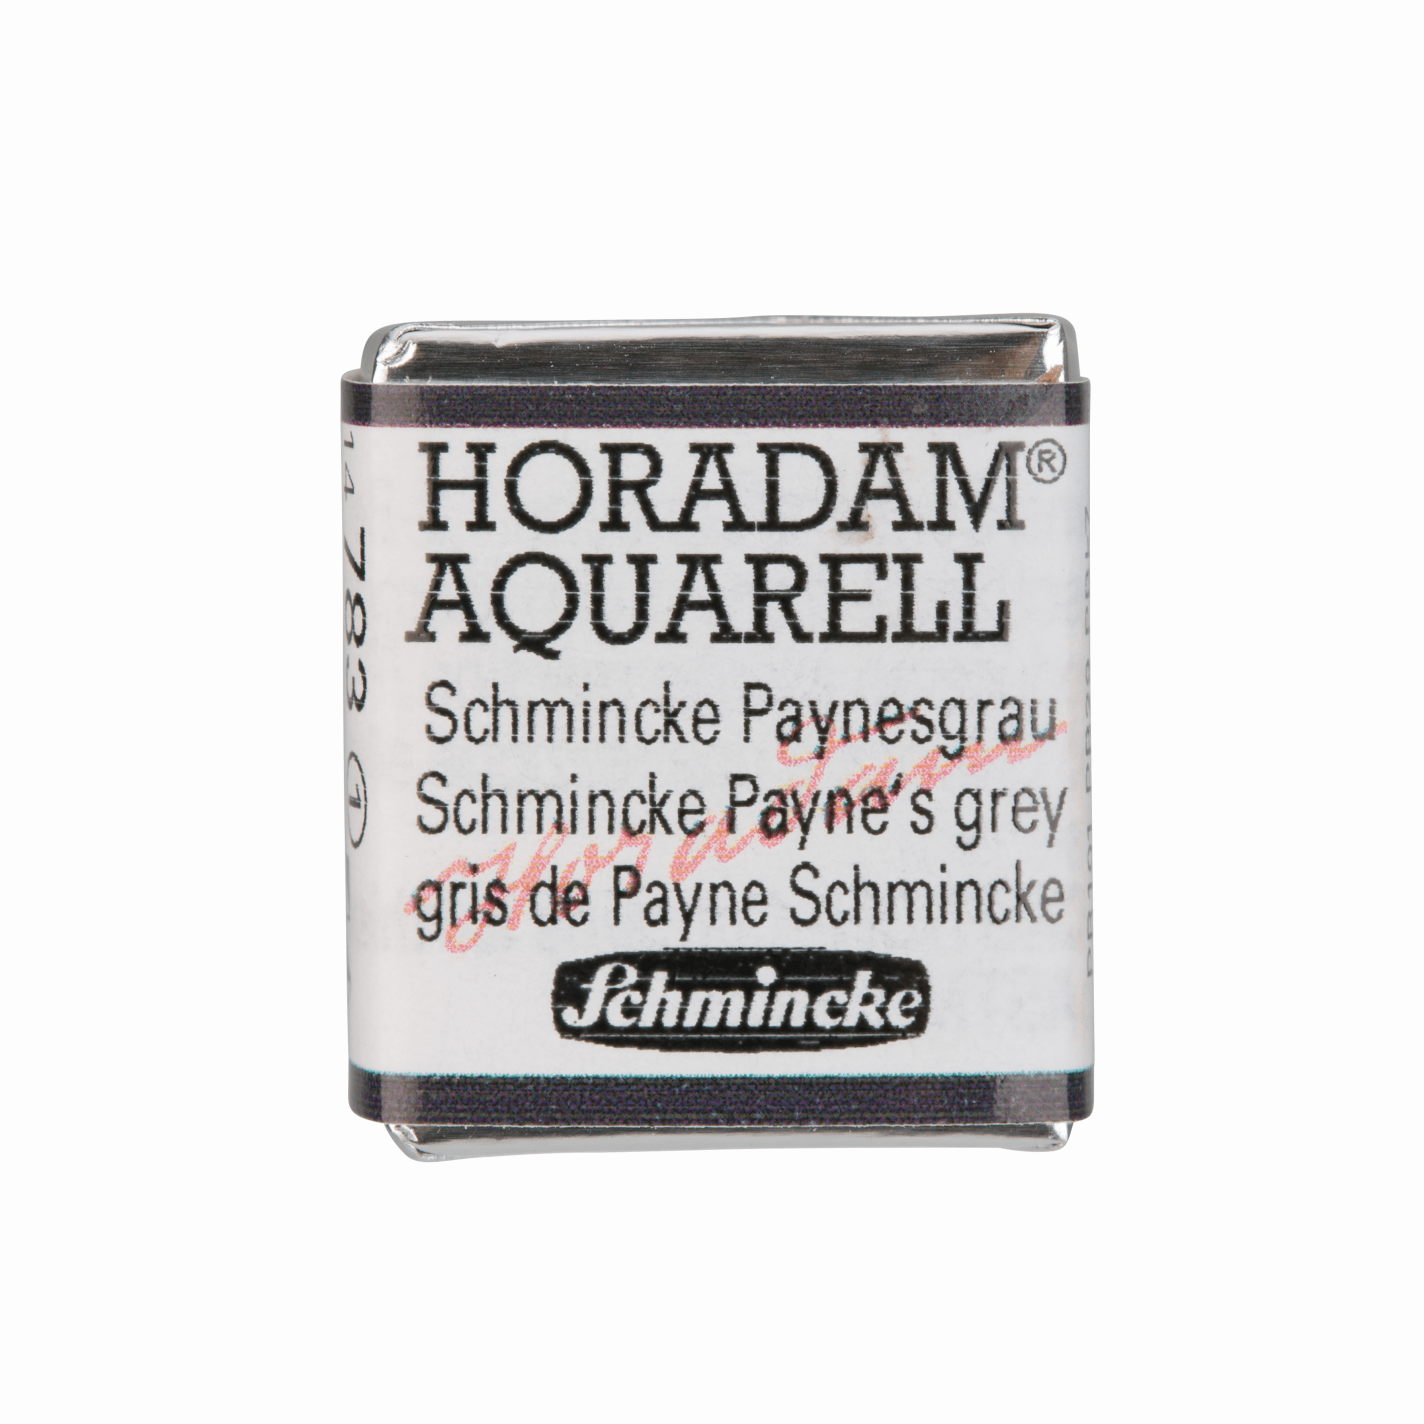 Schmincke Horadam Aquarell pans 1/2 pan Schmincke Payne‘s Grey